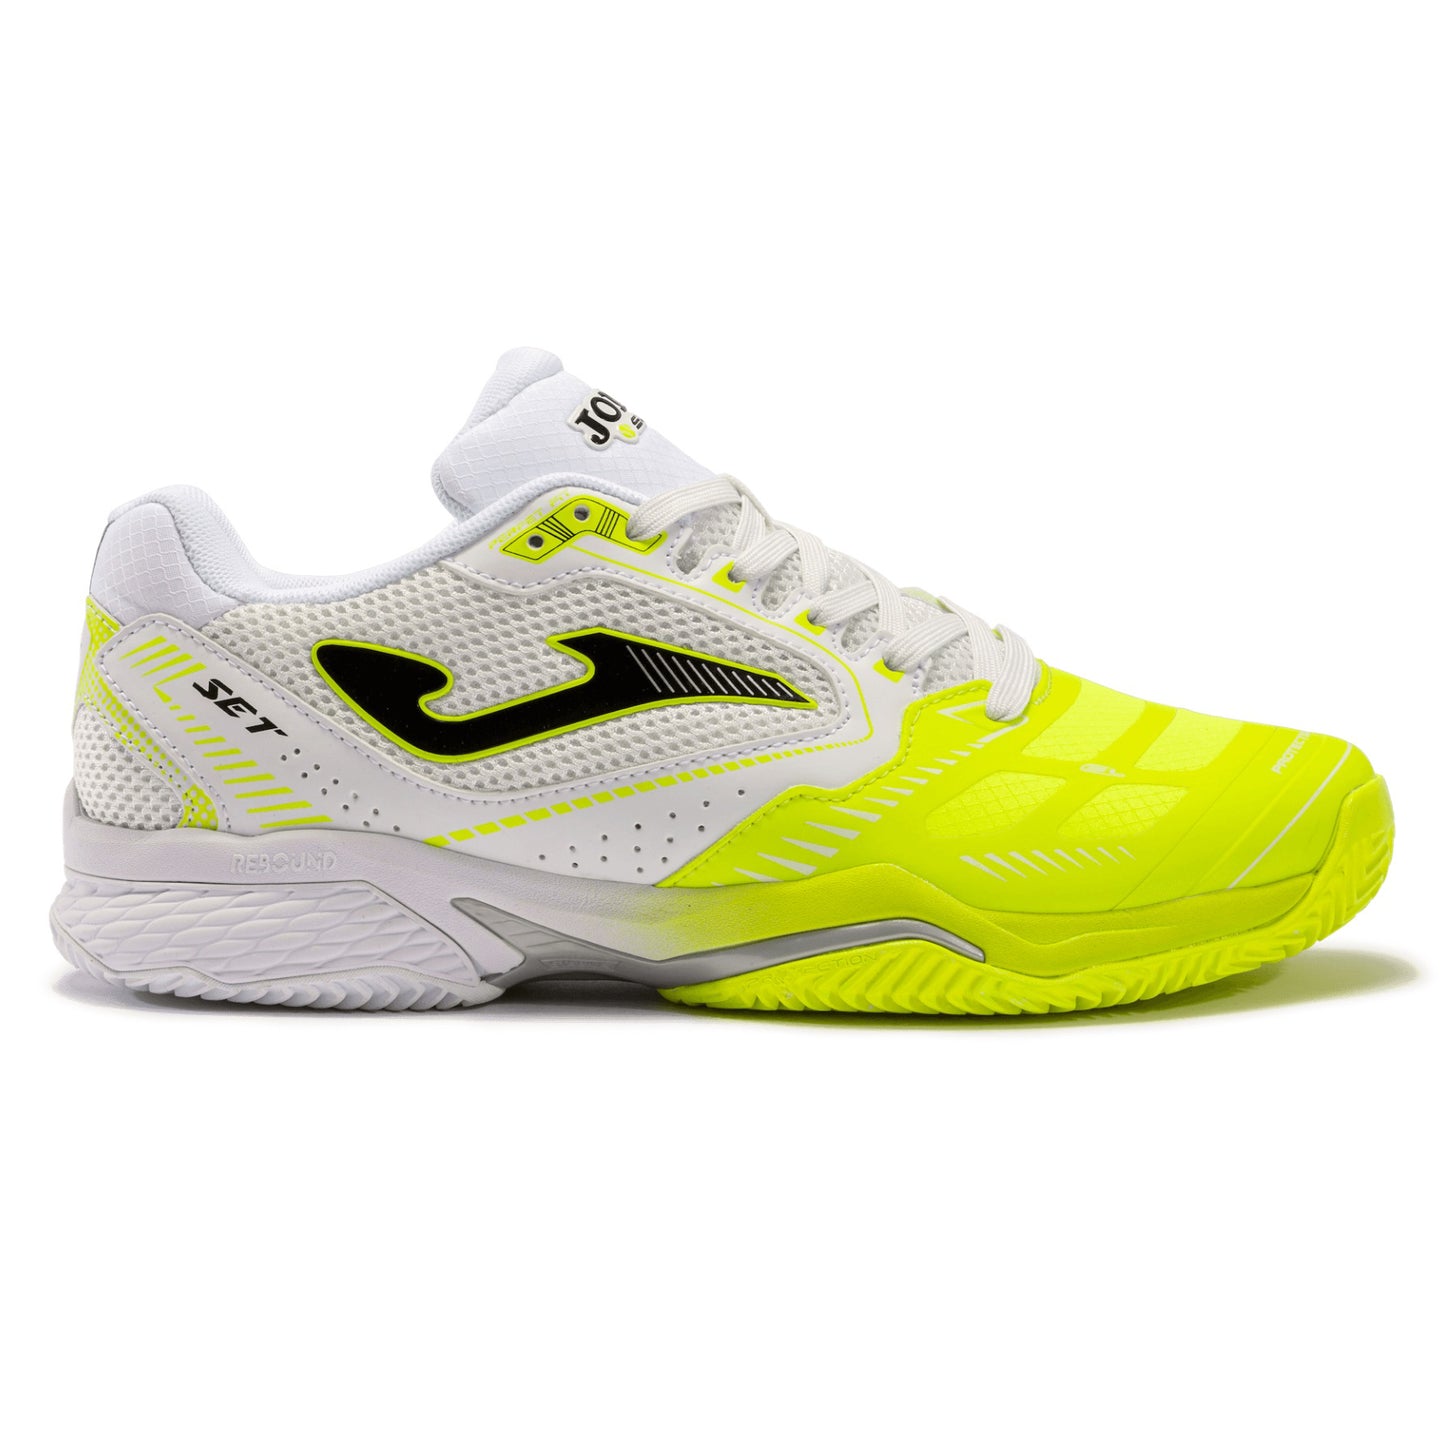 Joma T Set Men 2209 All Court Tennis Shoe, Lemon Fluor White - Best Price online Prokicksports.com